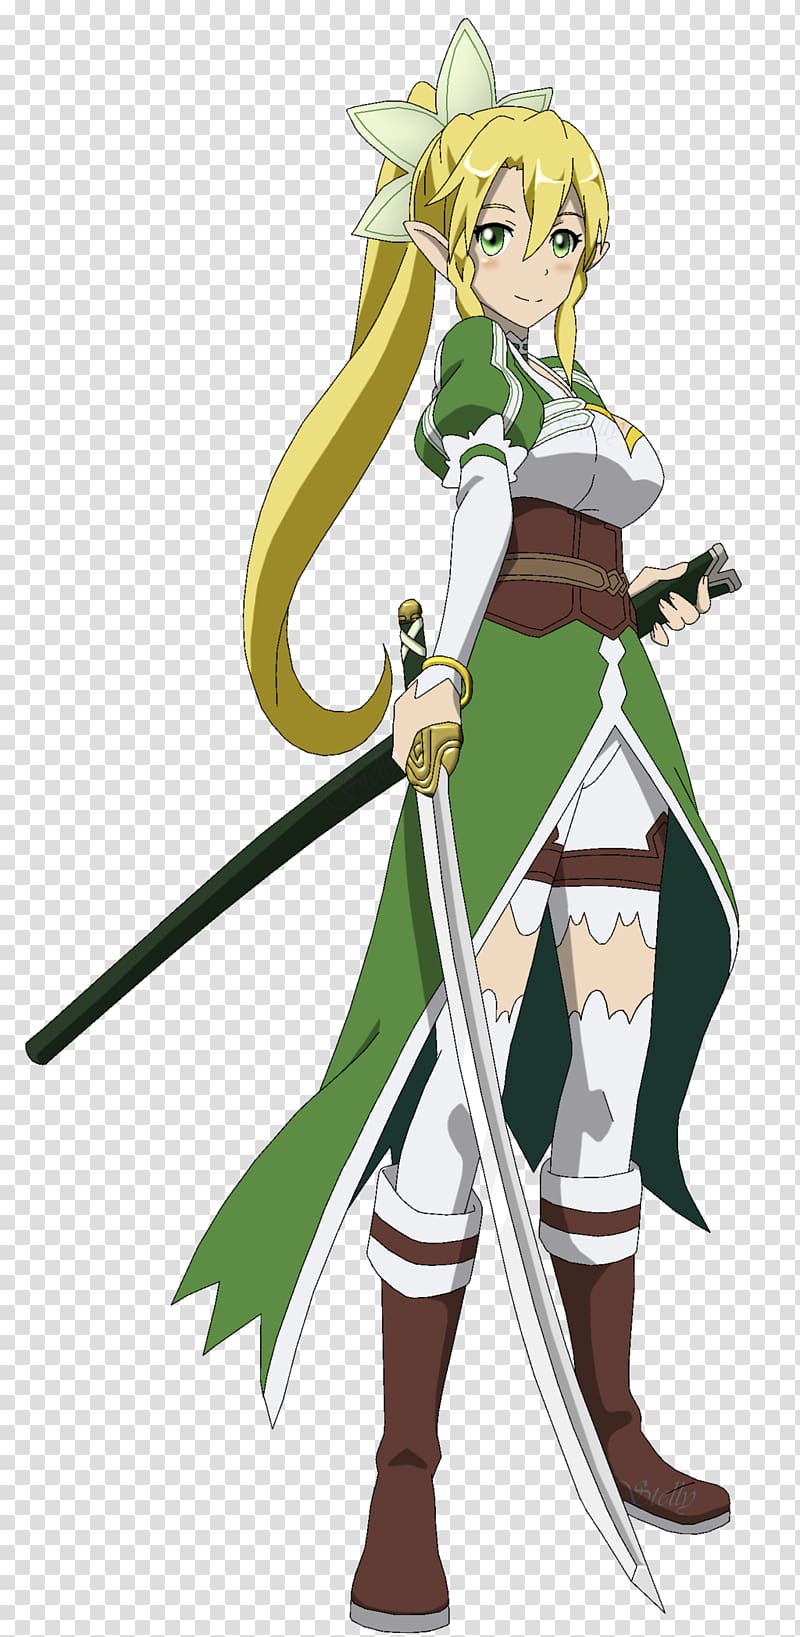 Leafa Kirito Asuna Sword Art Online 1: Aincrad, tetsuya naito transparent background PNG clipart